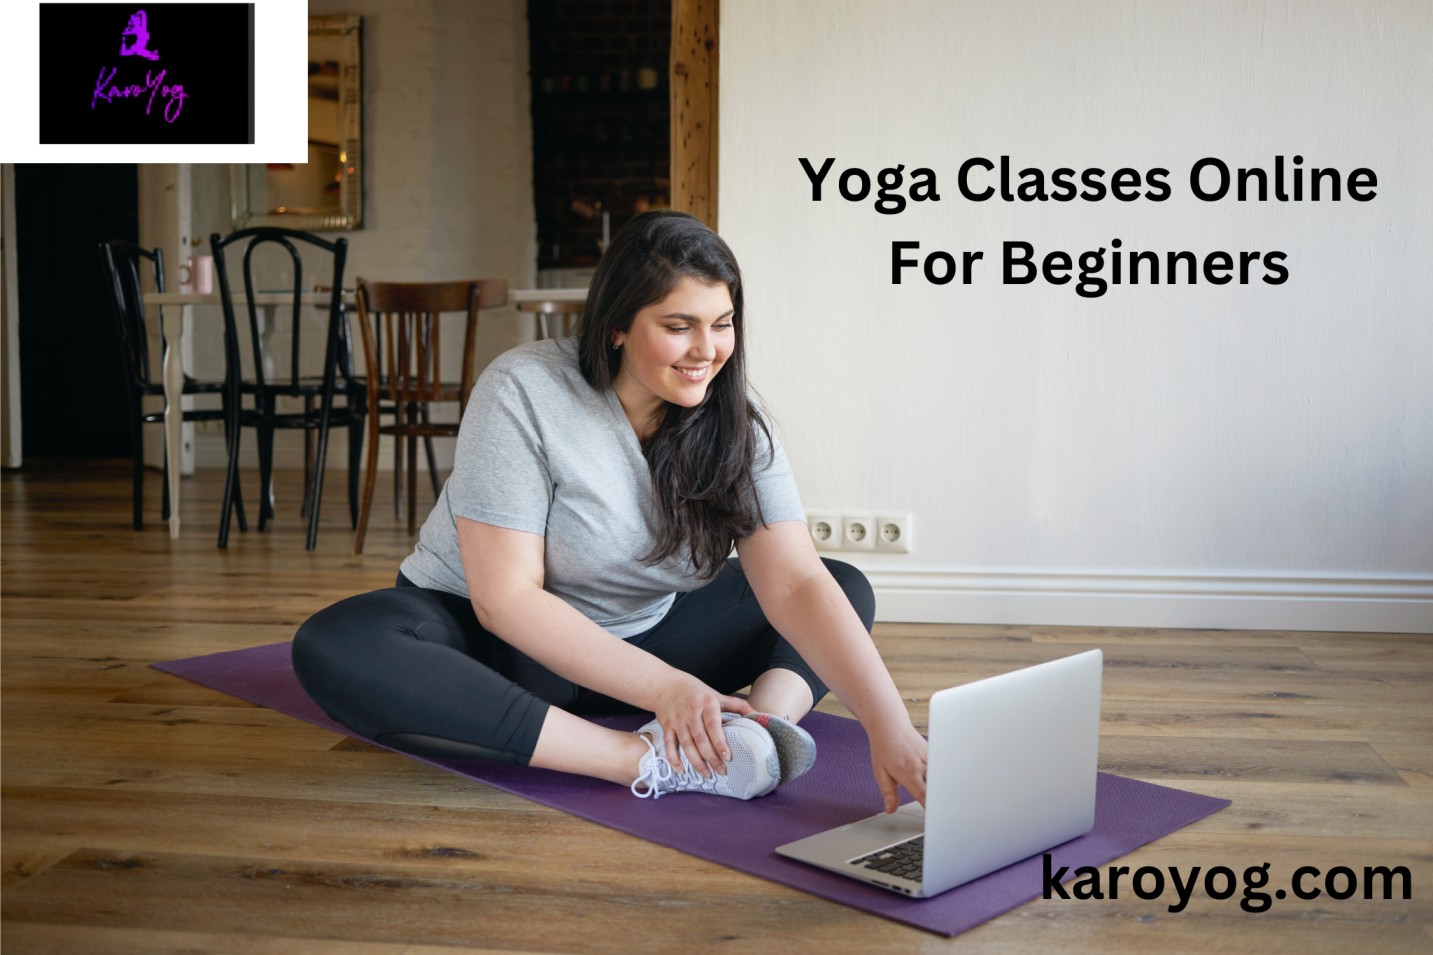 Yoga Classes Online For Beginners - Delhi Health, Personal Trainer